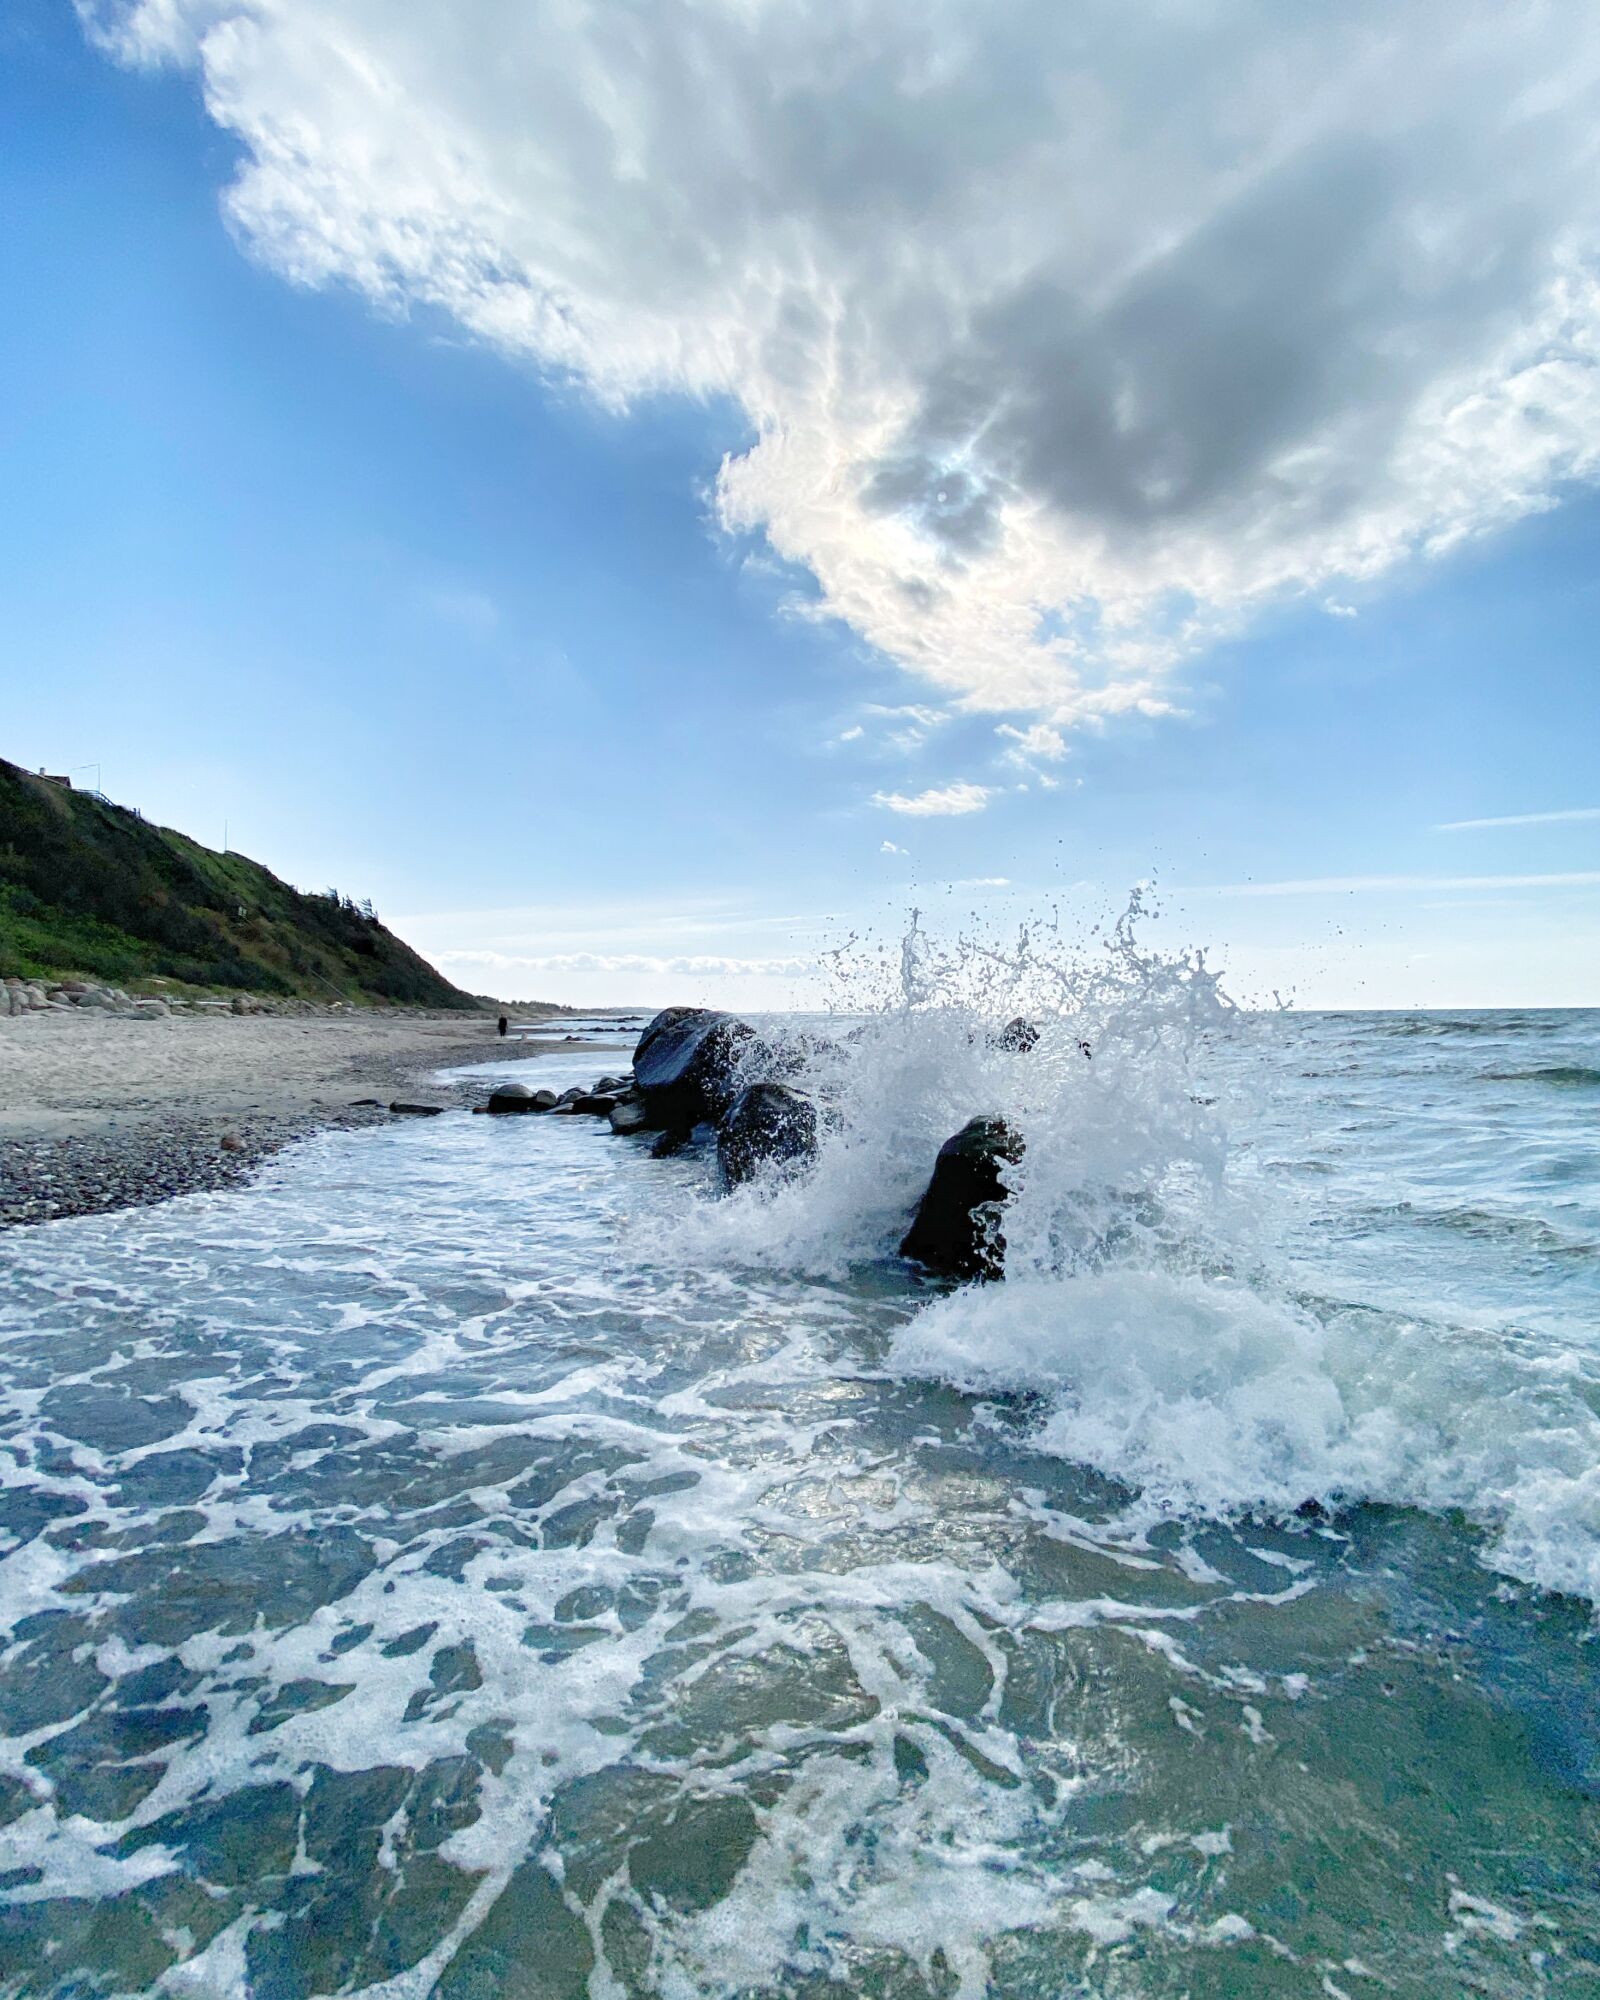 iPhone 11 Pro back triple camera 1.54mm f/2.4 sample photo. Coastline, waves, ocean photography